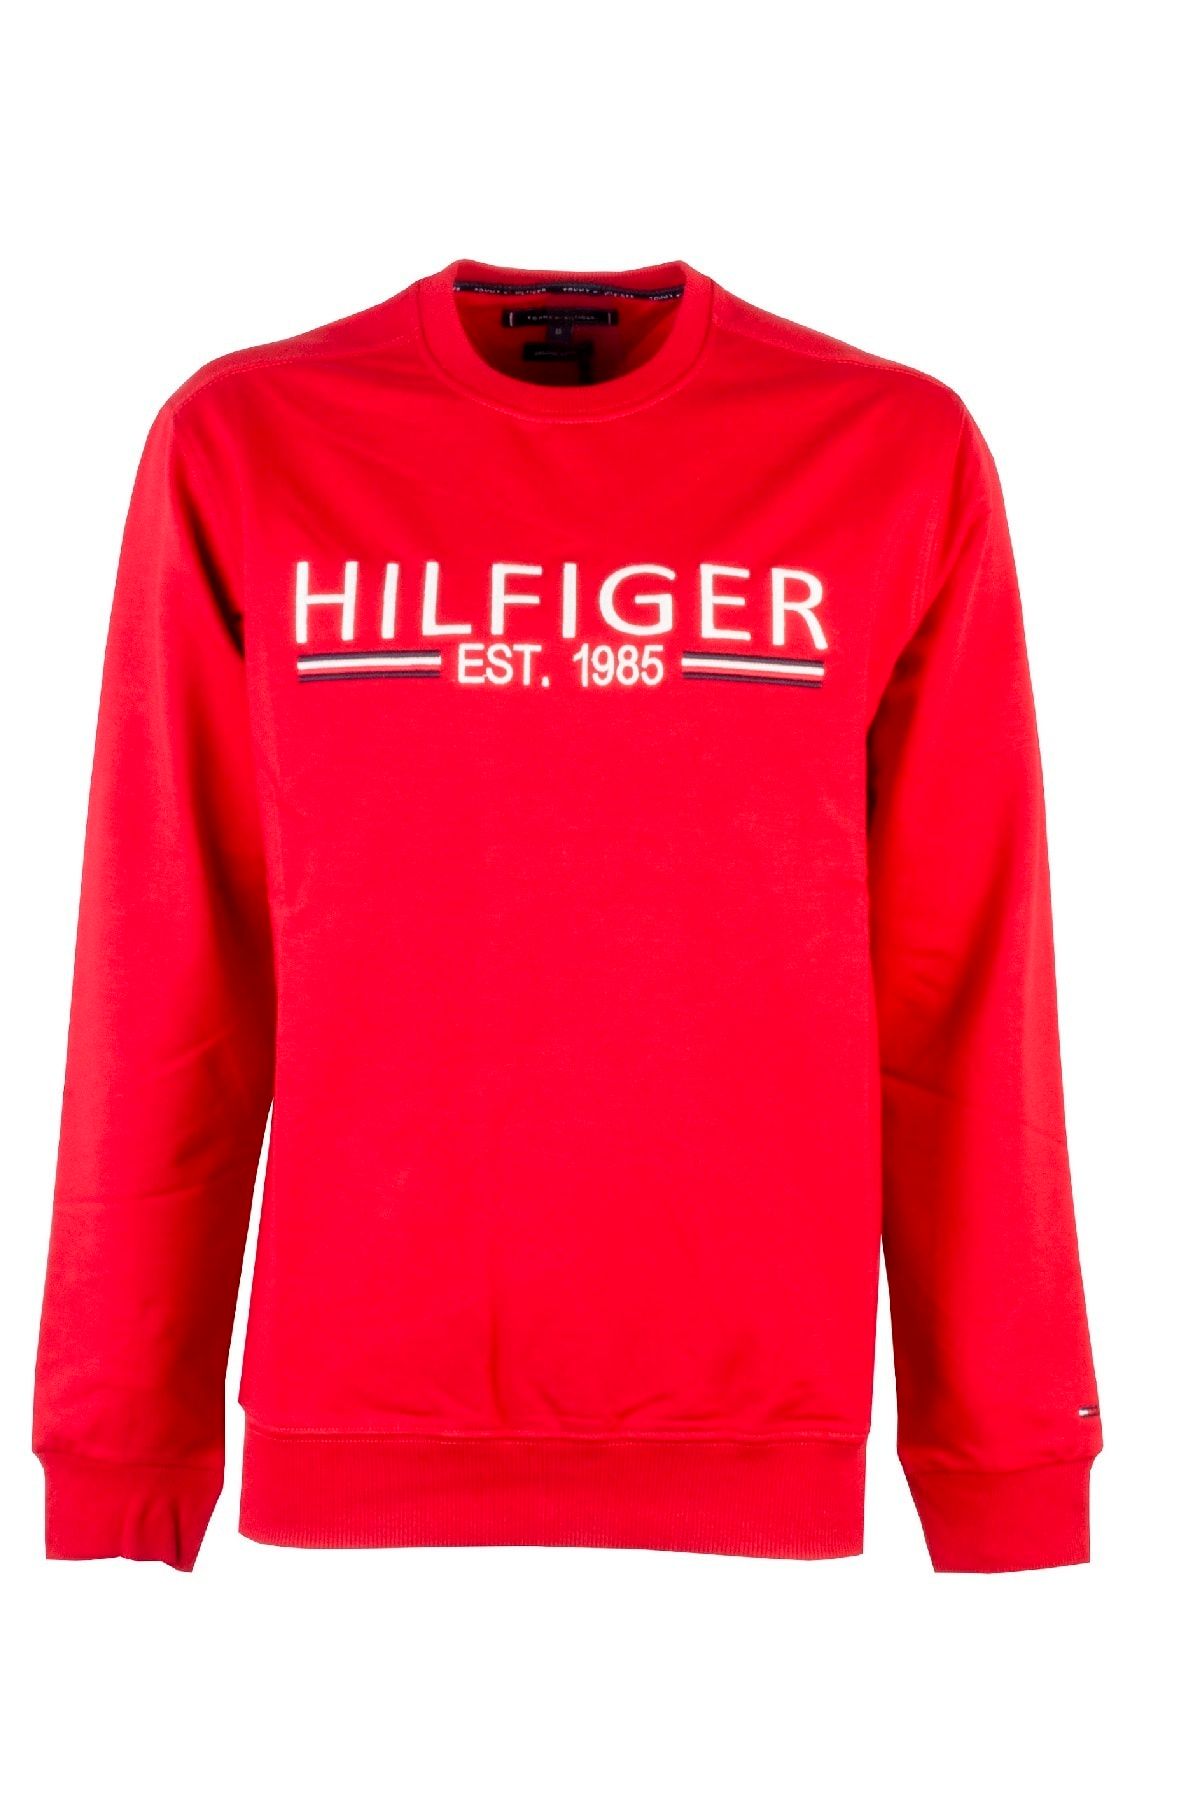 Tommy Hilfiger Est. 1985 Sweatshirt Cknpxy78